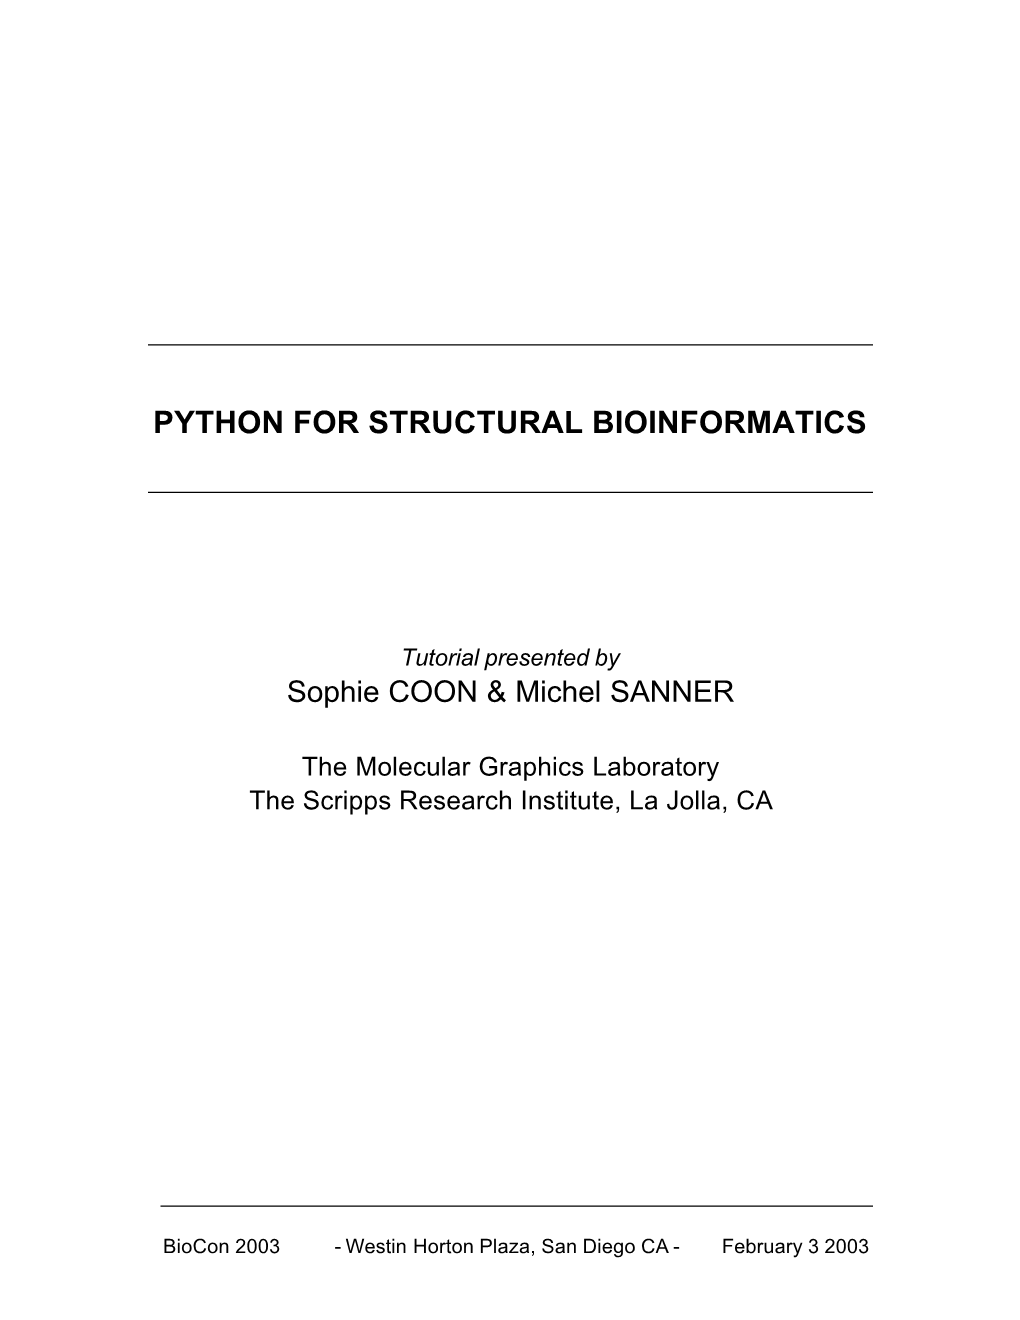 Python for Structural Bioinformatics